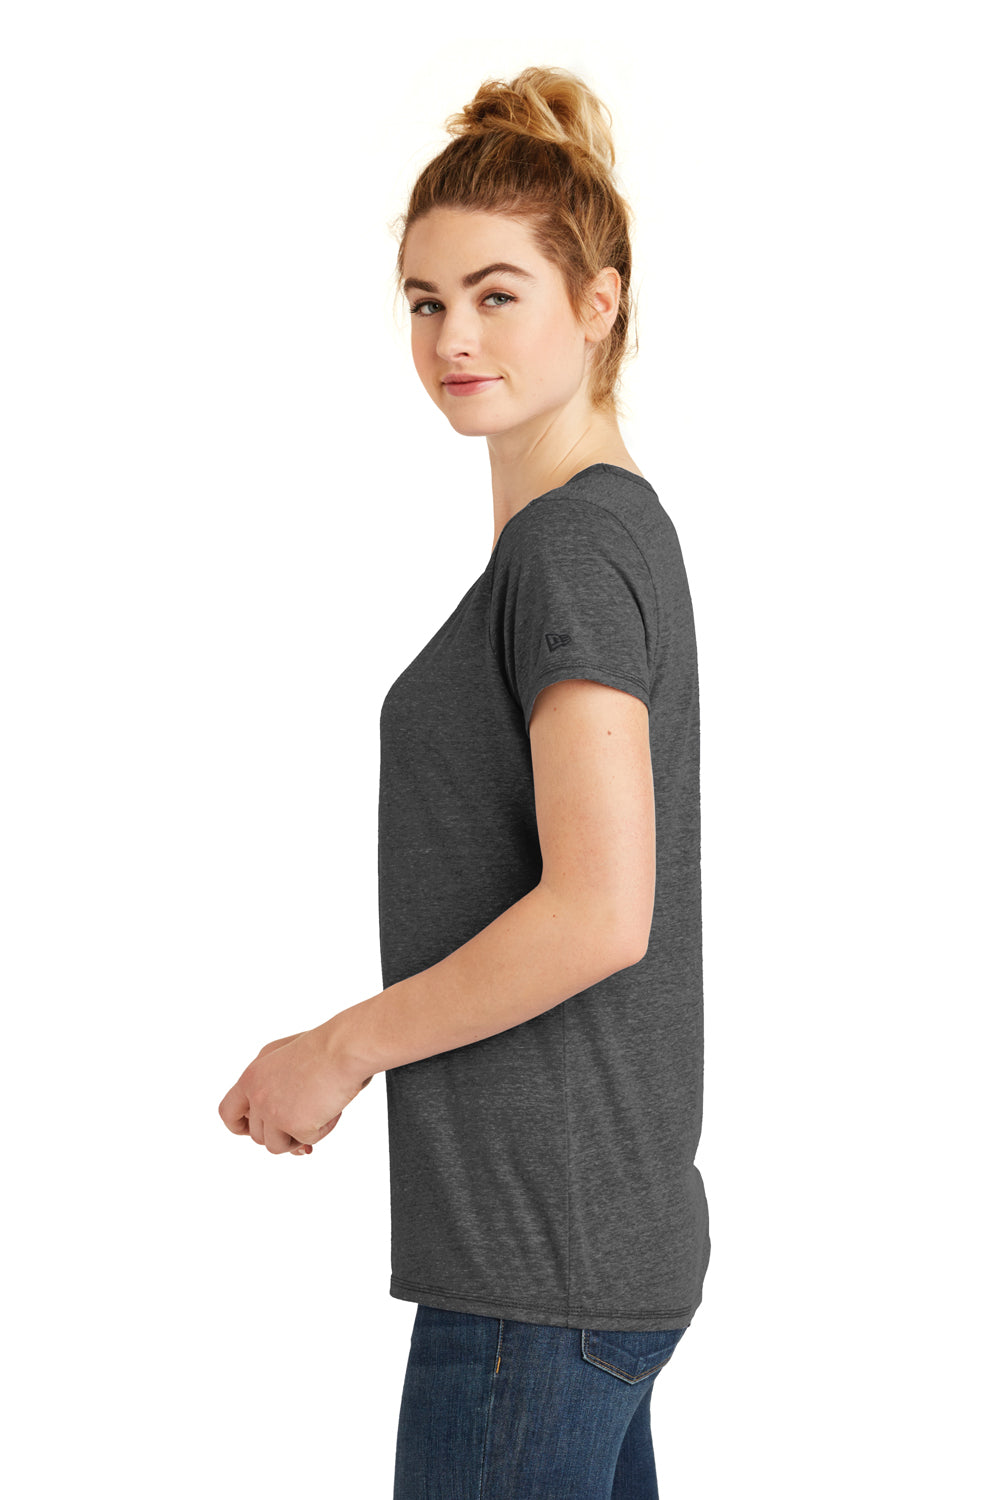 New Era LNEA130 Womens Performance Moisture Wicking Short Sleeve Crewneck T-Shirt Dark Graphite Grey Side